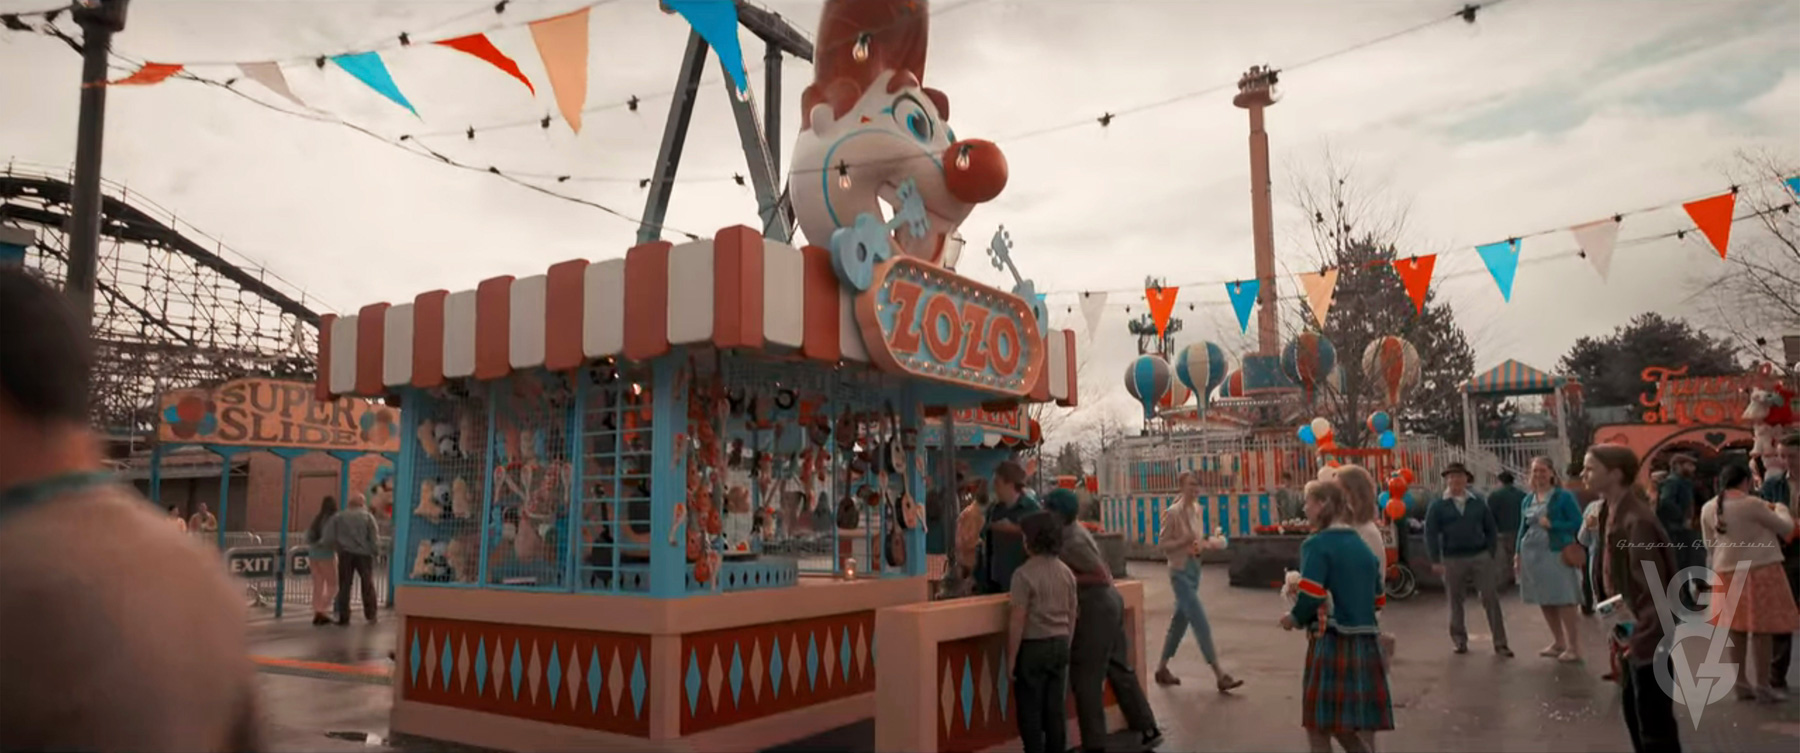 0 Lost Ollie 'Dreamland Amusement Park' Zozo's Ball Toss Booth Location Install Screen Still